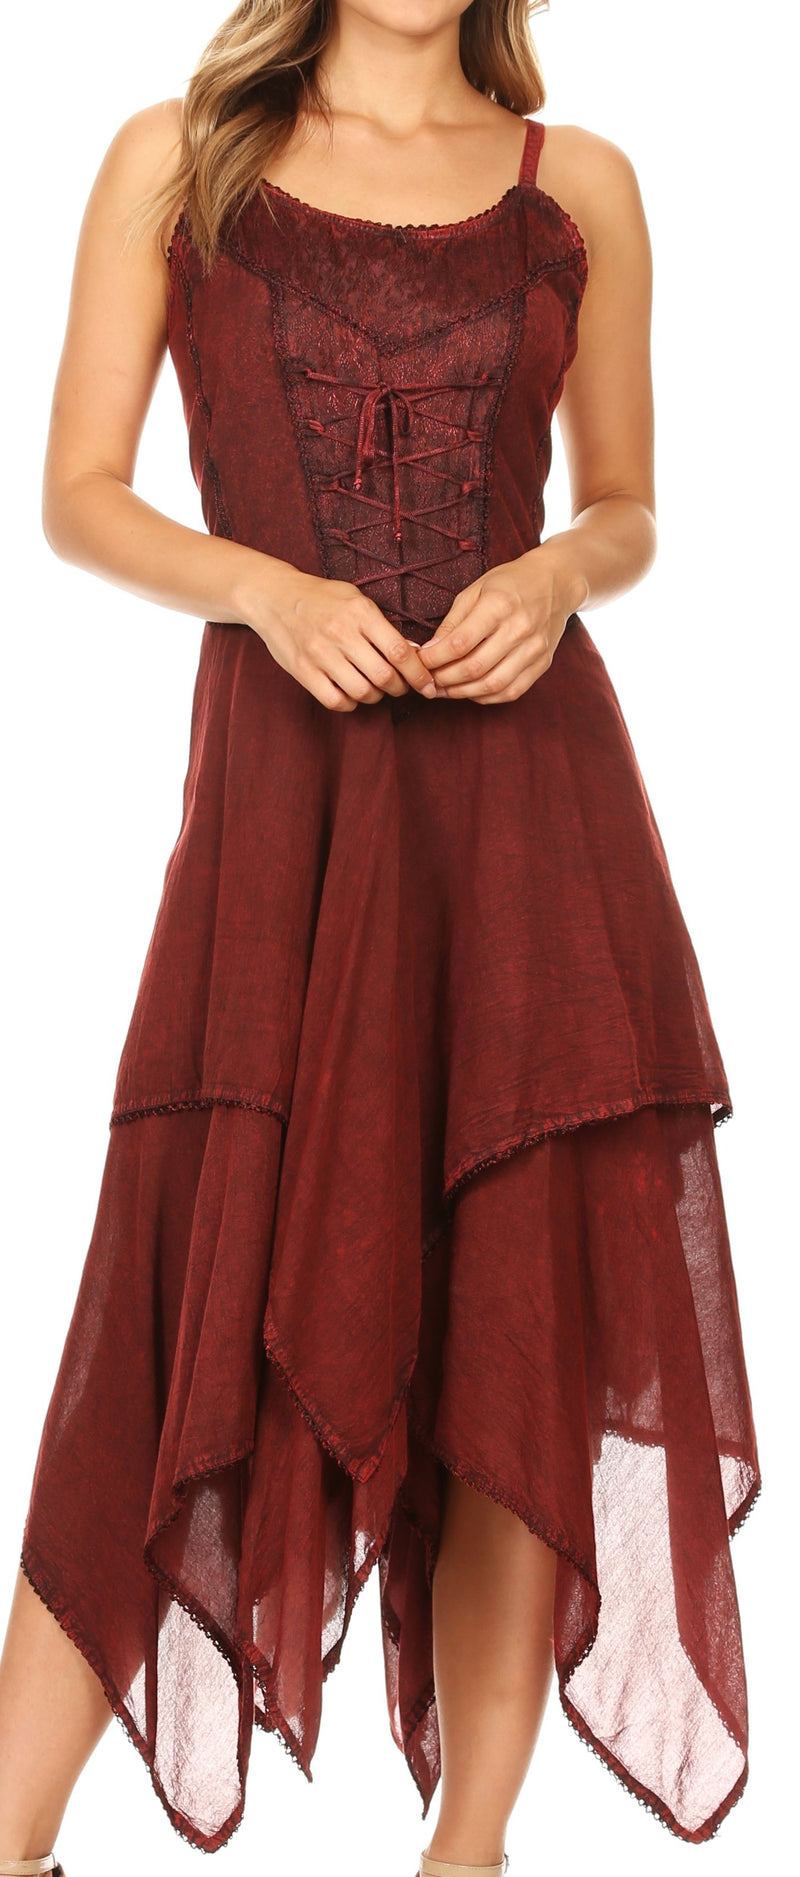 Sakkas Natasha Corset Front Double Layer Handkerchief Dress with Adjustable Straps